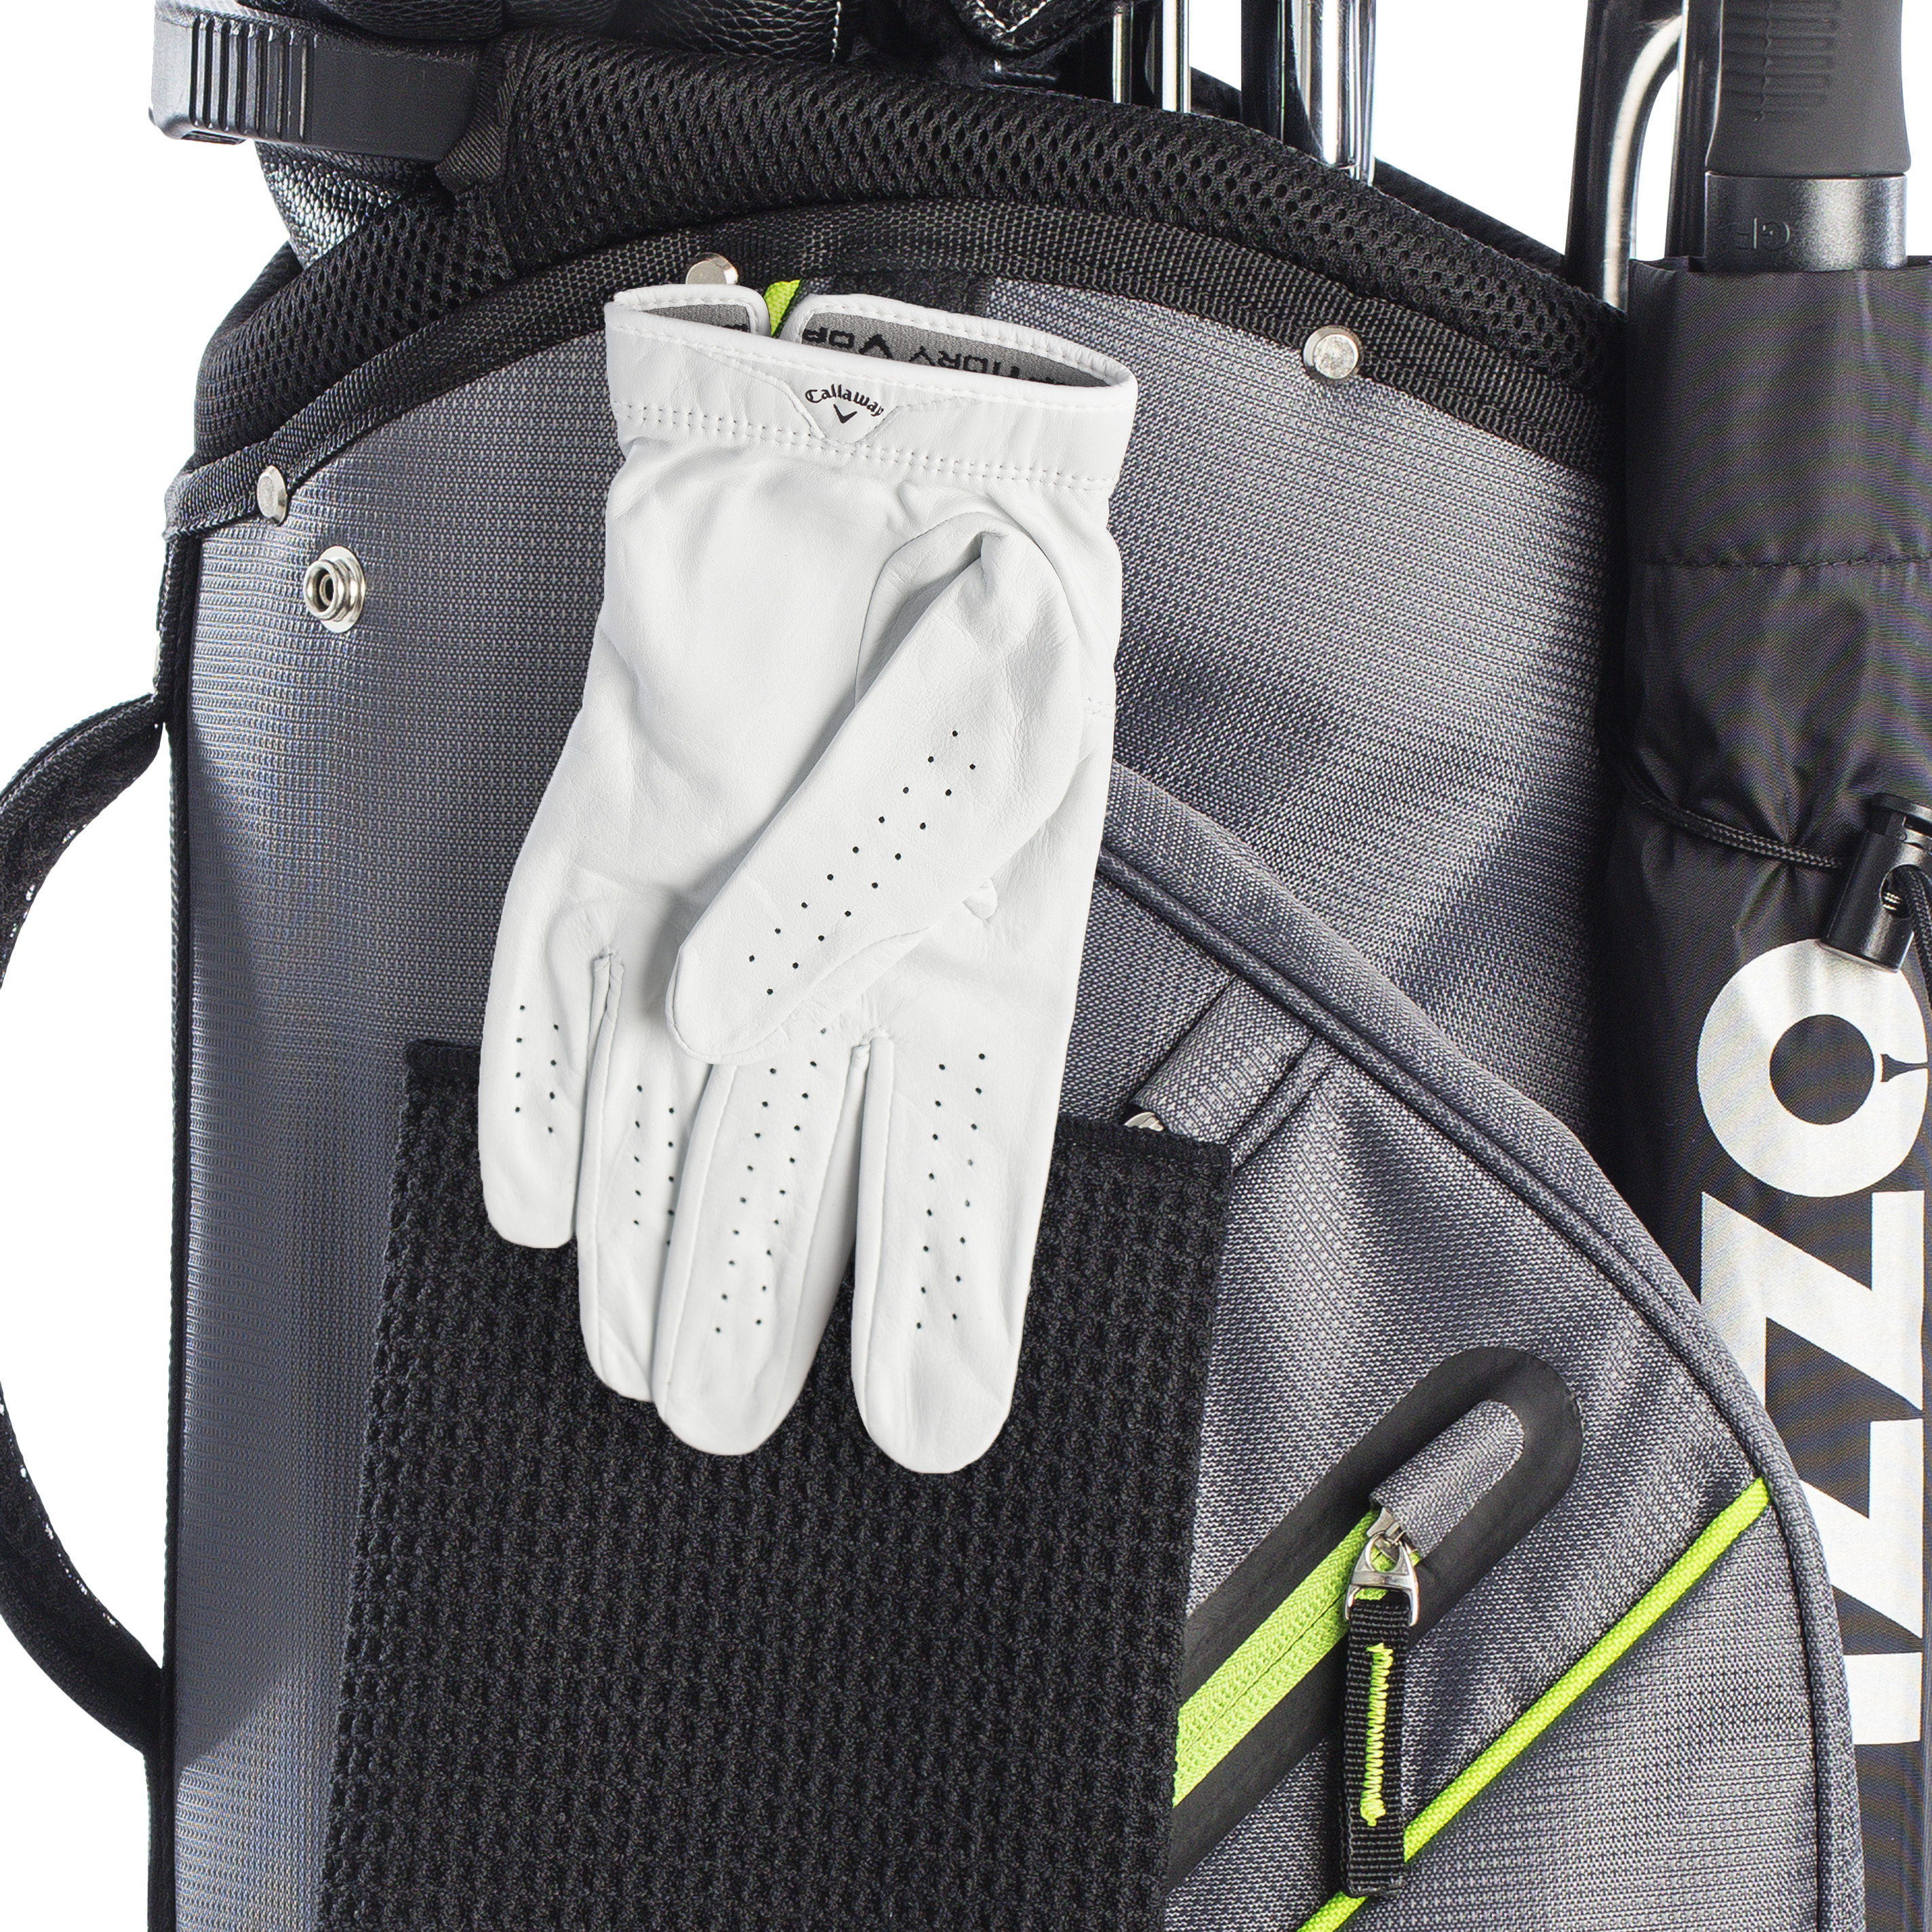 Izzo Golf Ultra-Lite Cart Bag - Grey/Lime